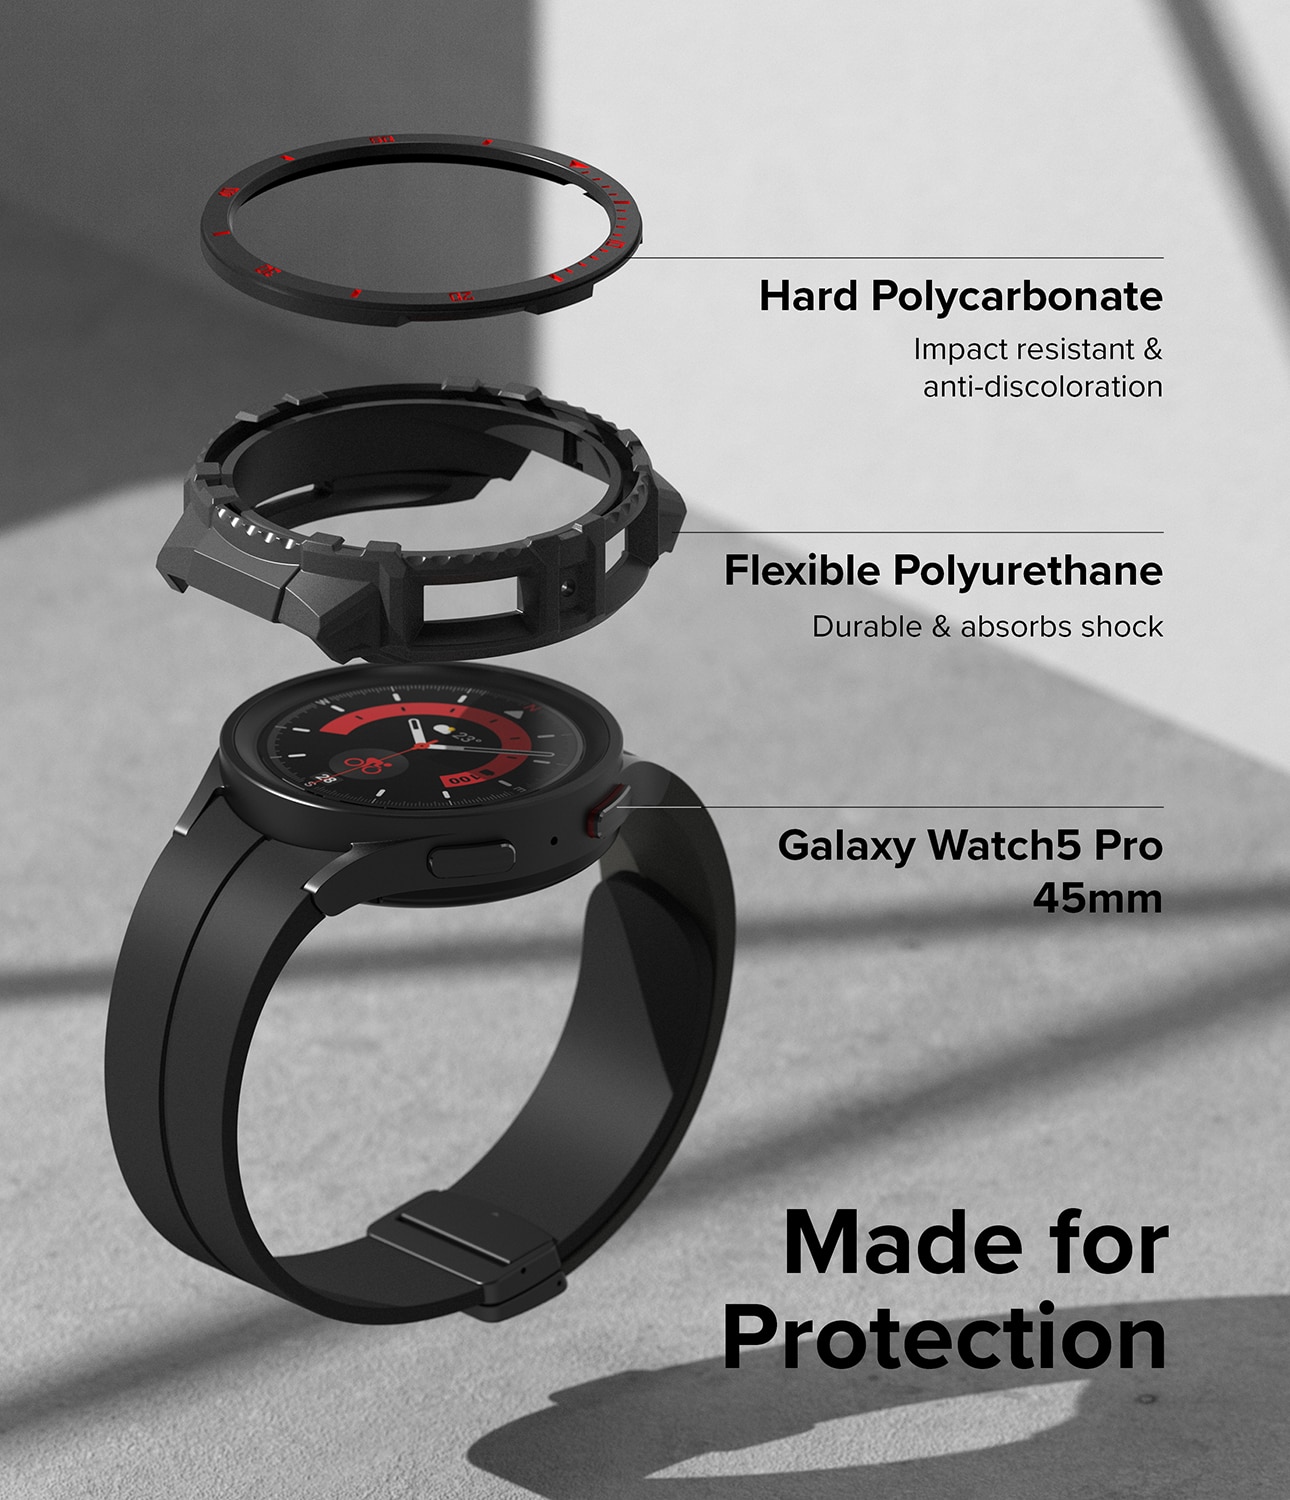 Fusion X Funda Samsung Galaxy Watch 5 Pro 45mm Black (Red Index)